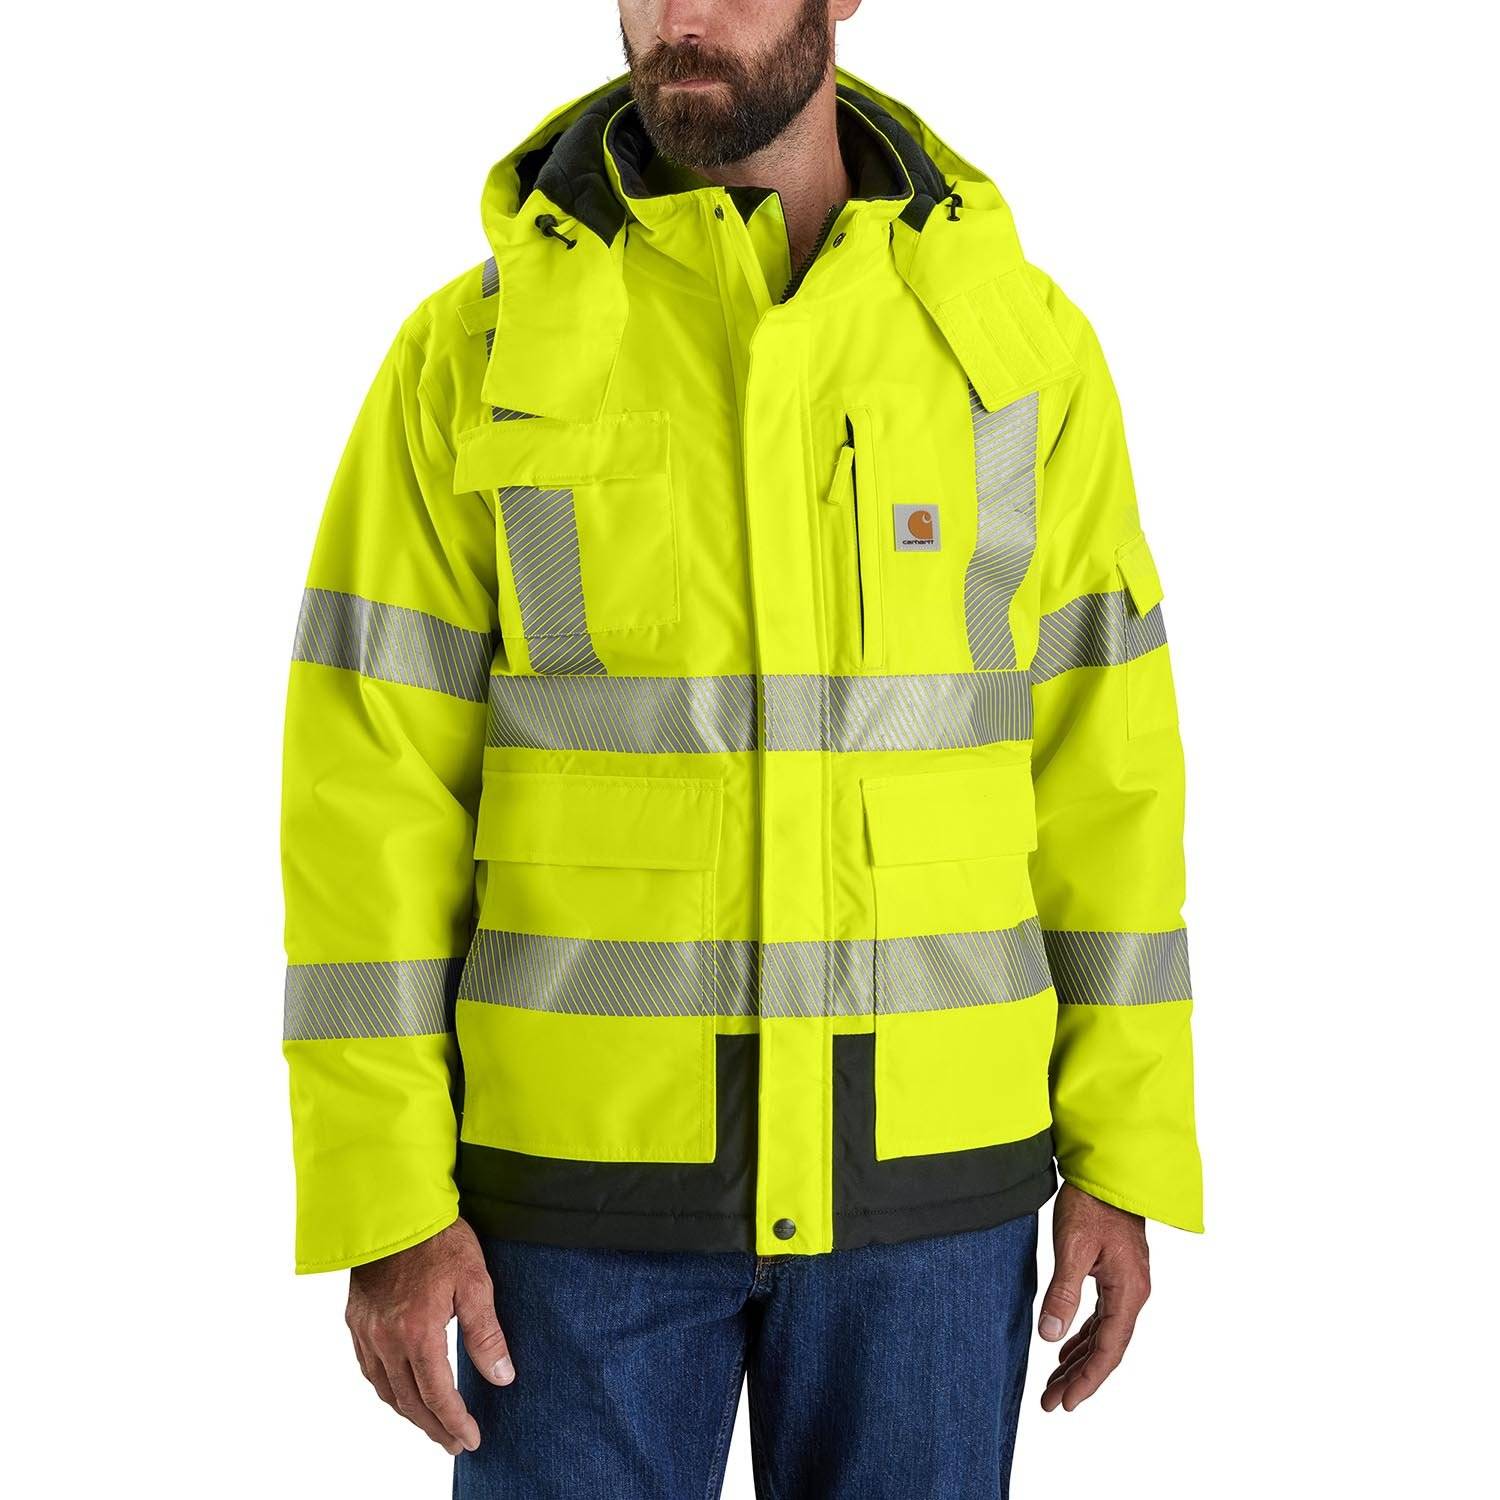 Carhartt High-Visibility Waterproof Class 3 Sherwood Jacket